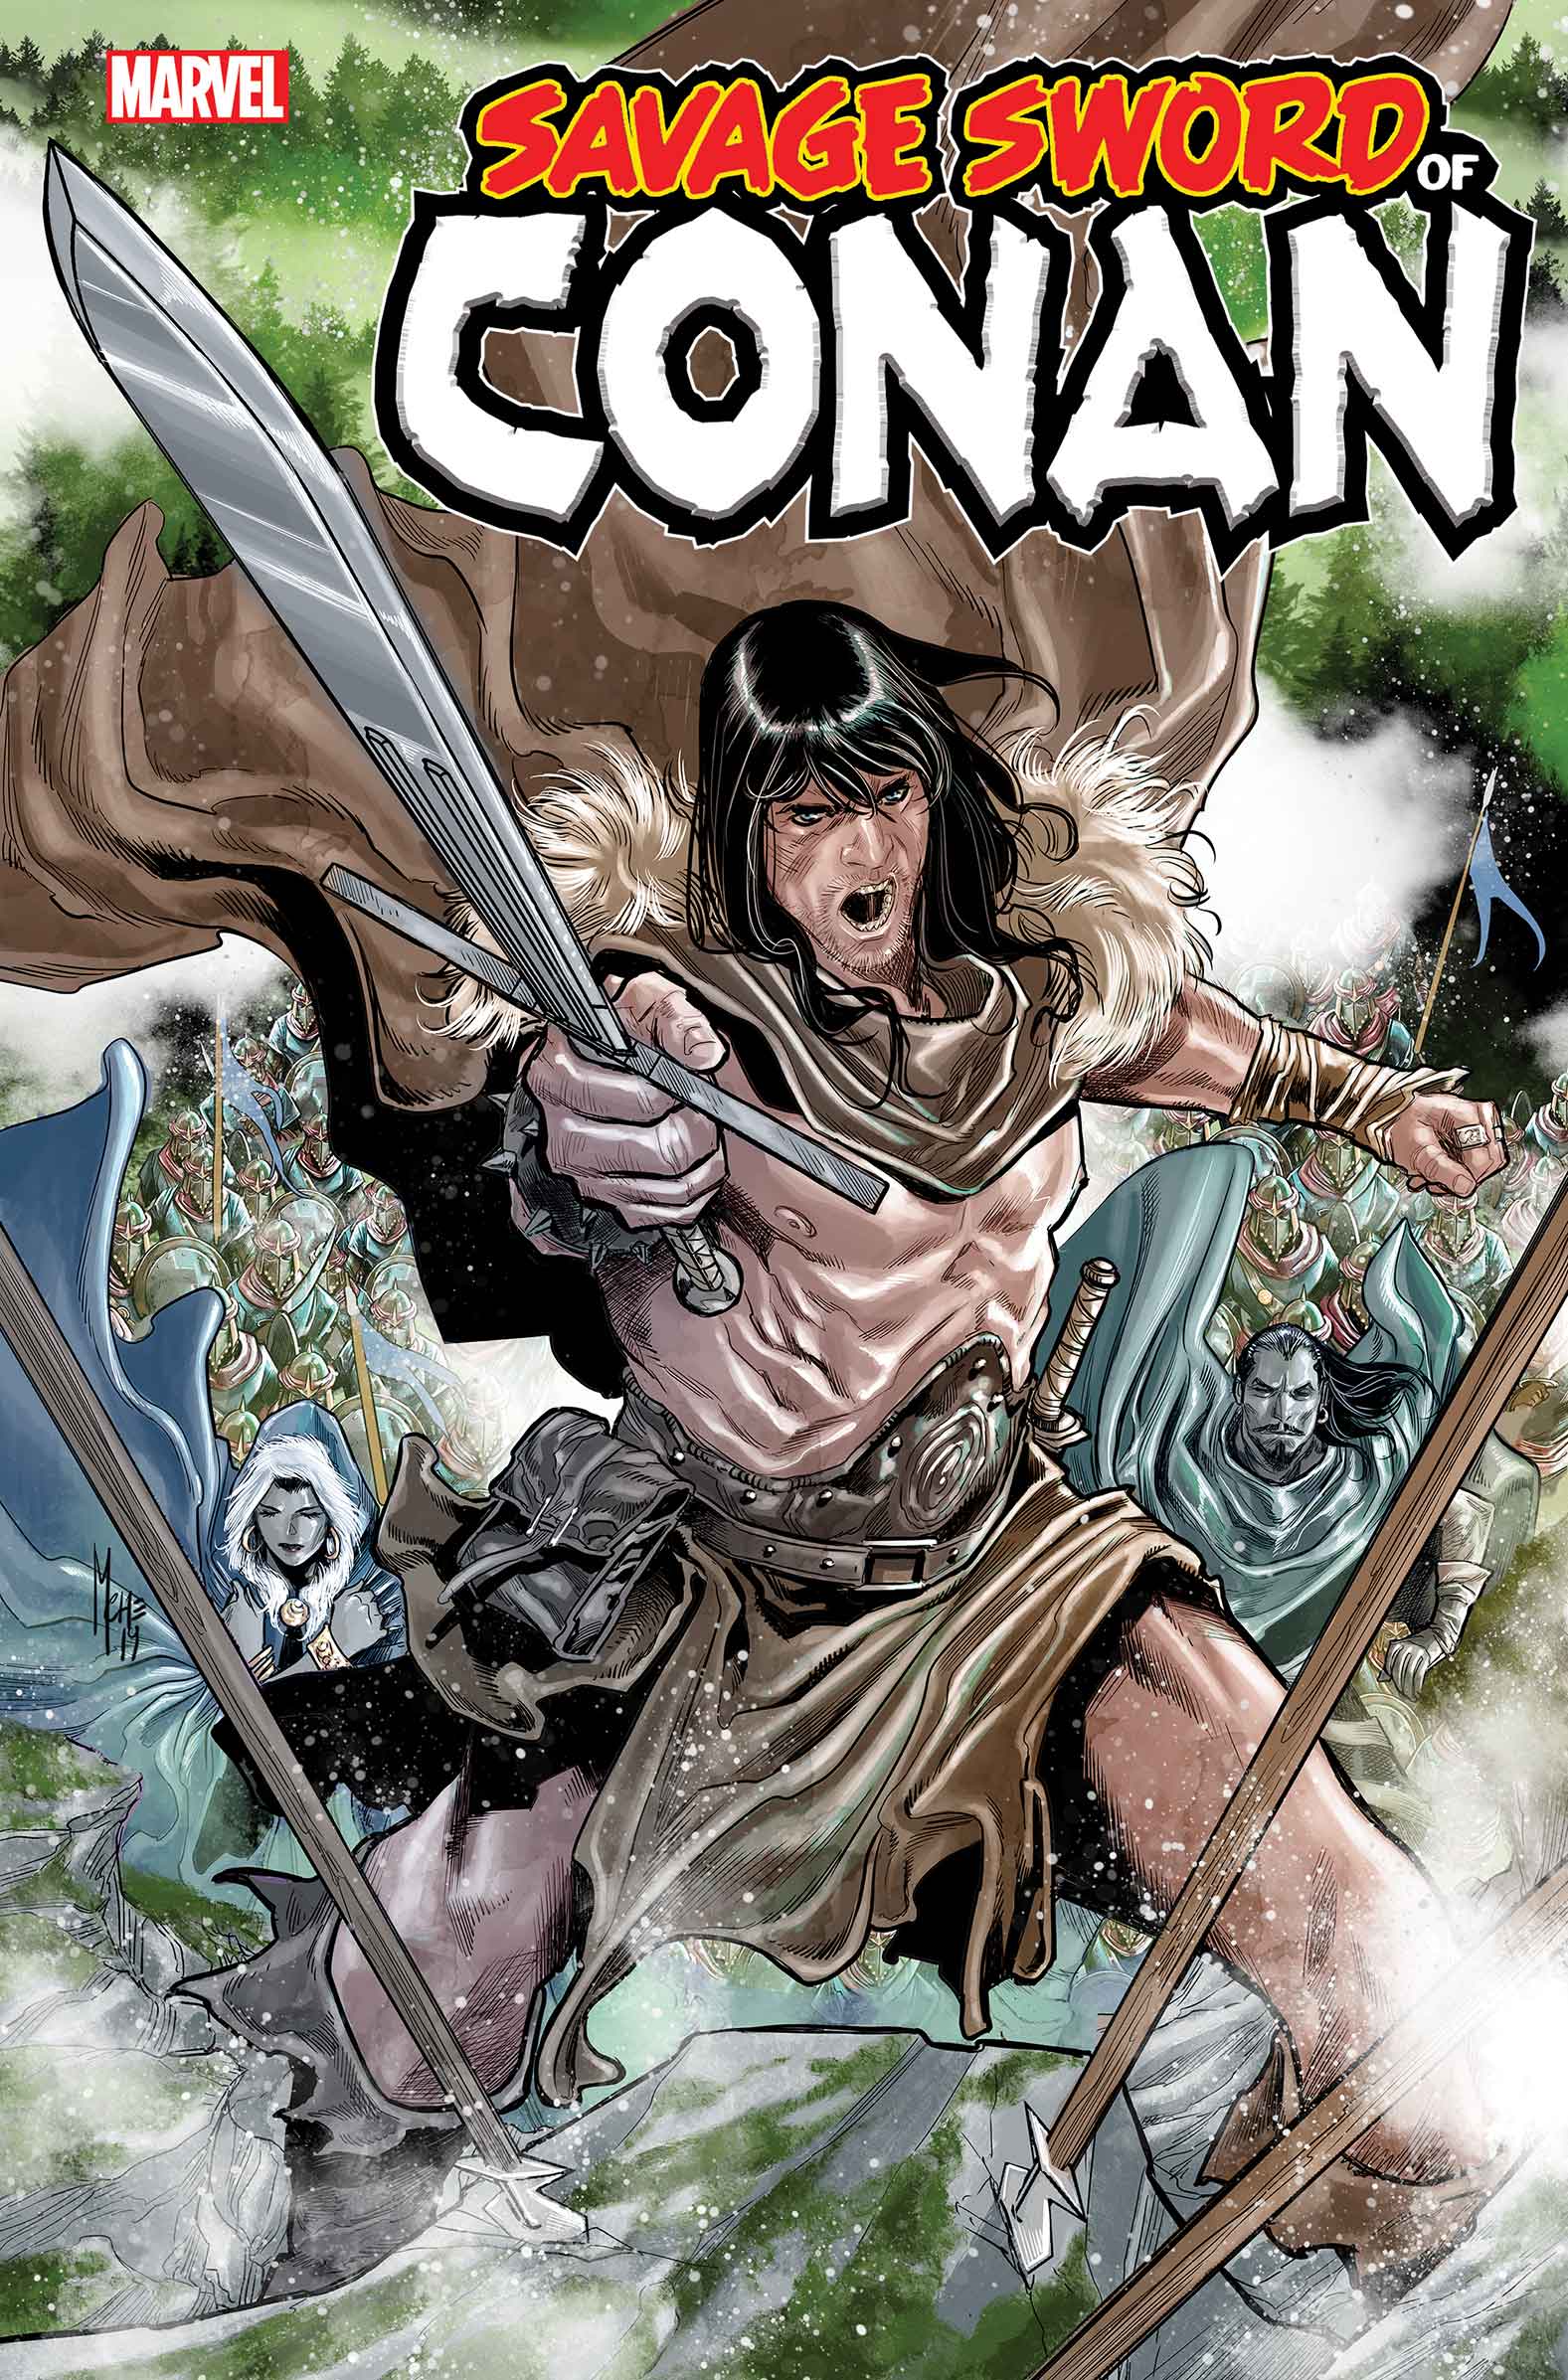 Savage Sword of Conan (2019) #10